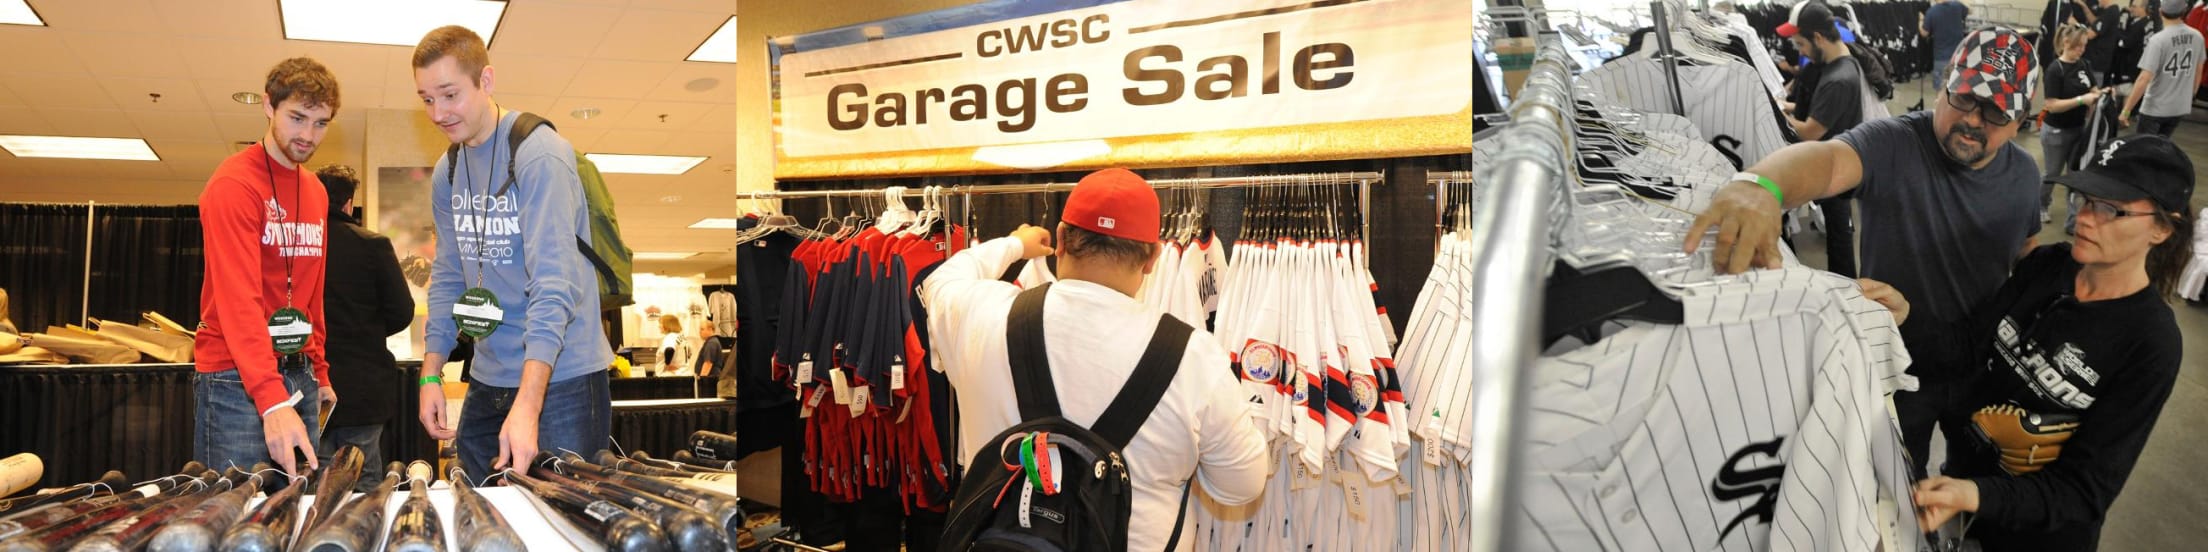 White Sox garage sale tomorrow